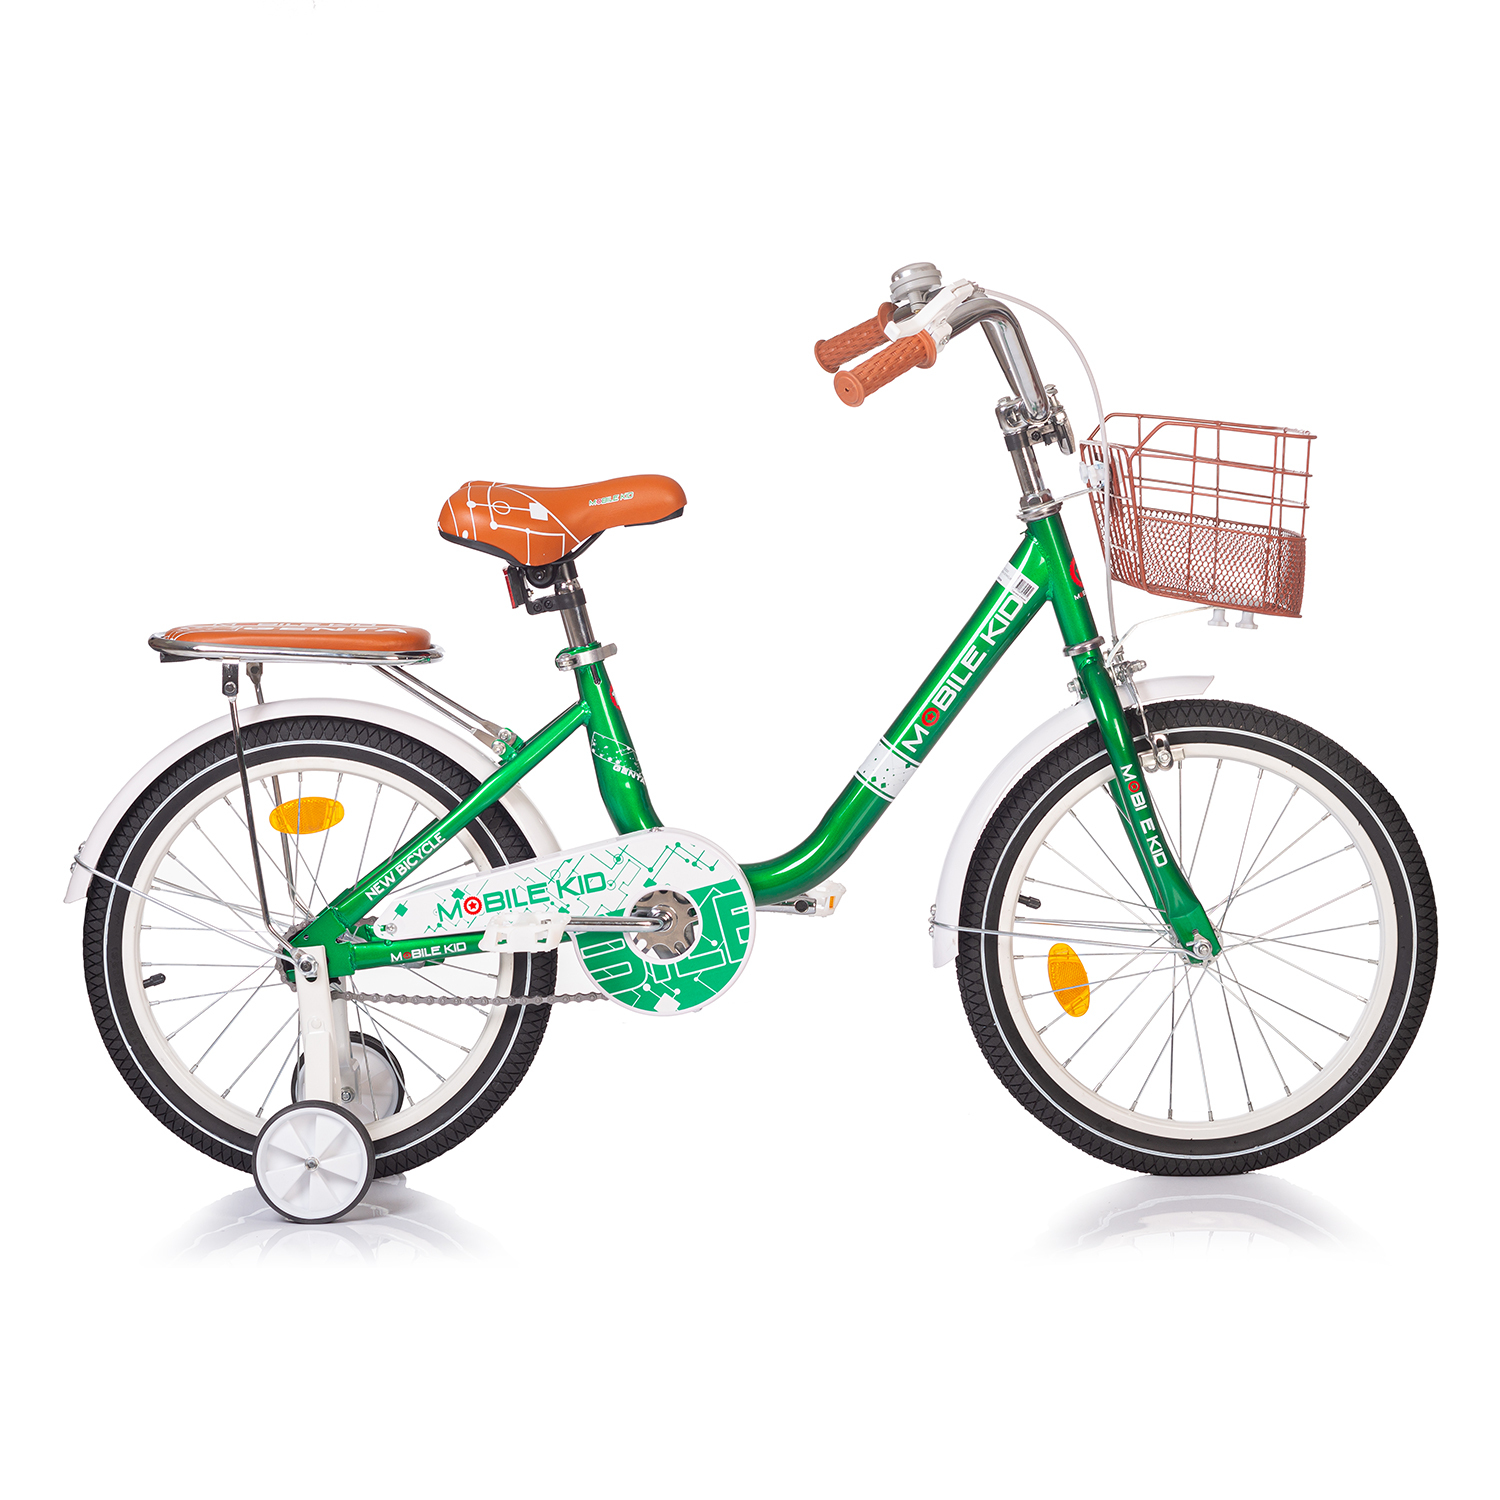 фото Велосипед mobile kid genta 18 темно-зеленый